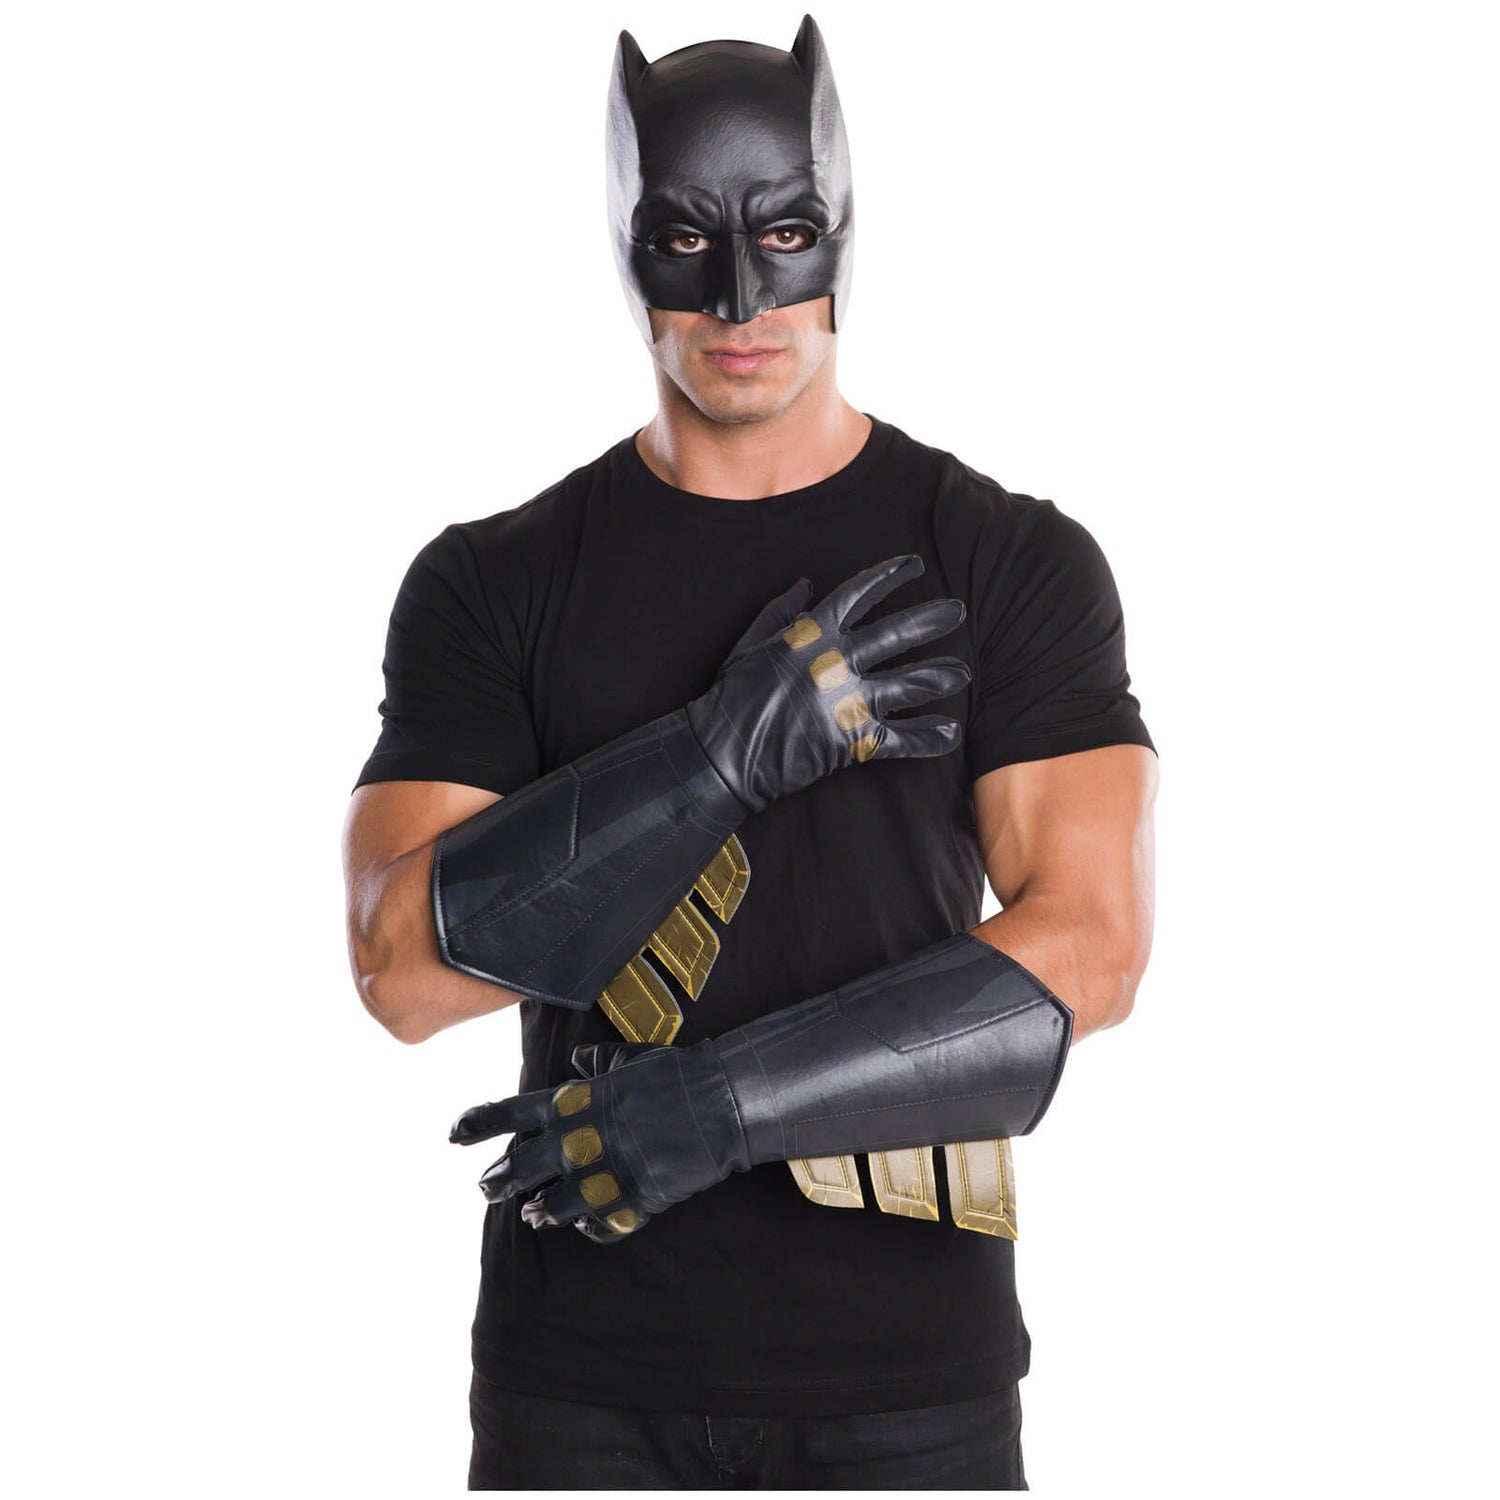 Official Rubies DC Comics Batman Gauntlets Adult Costume